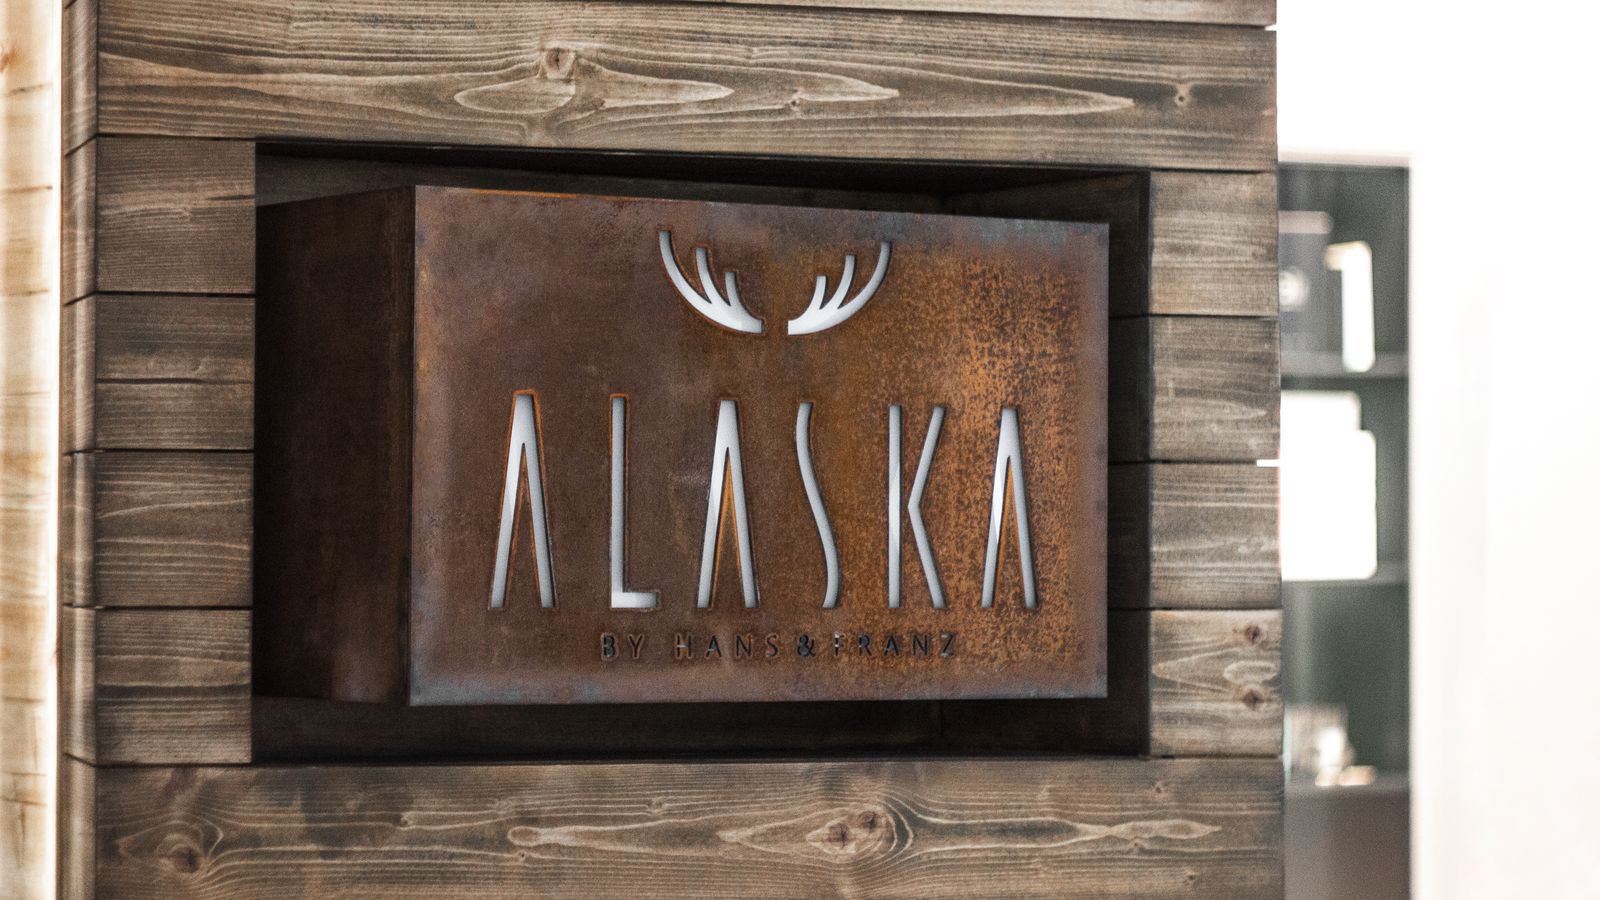 Alaska by Hans and Franz custom interior logo sign made of aluminum and acrylic for branding